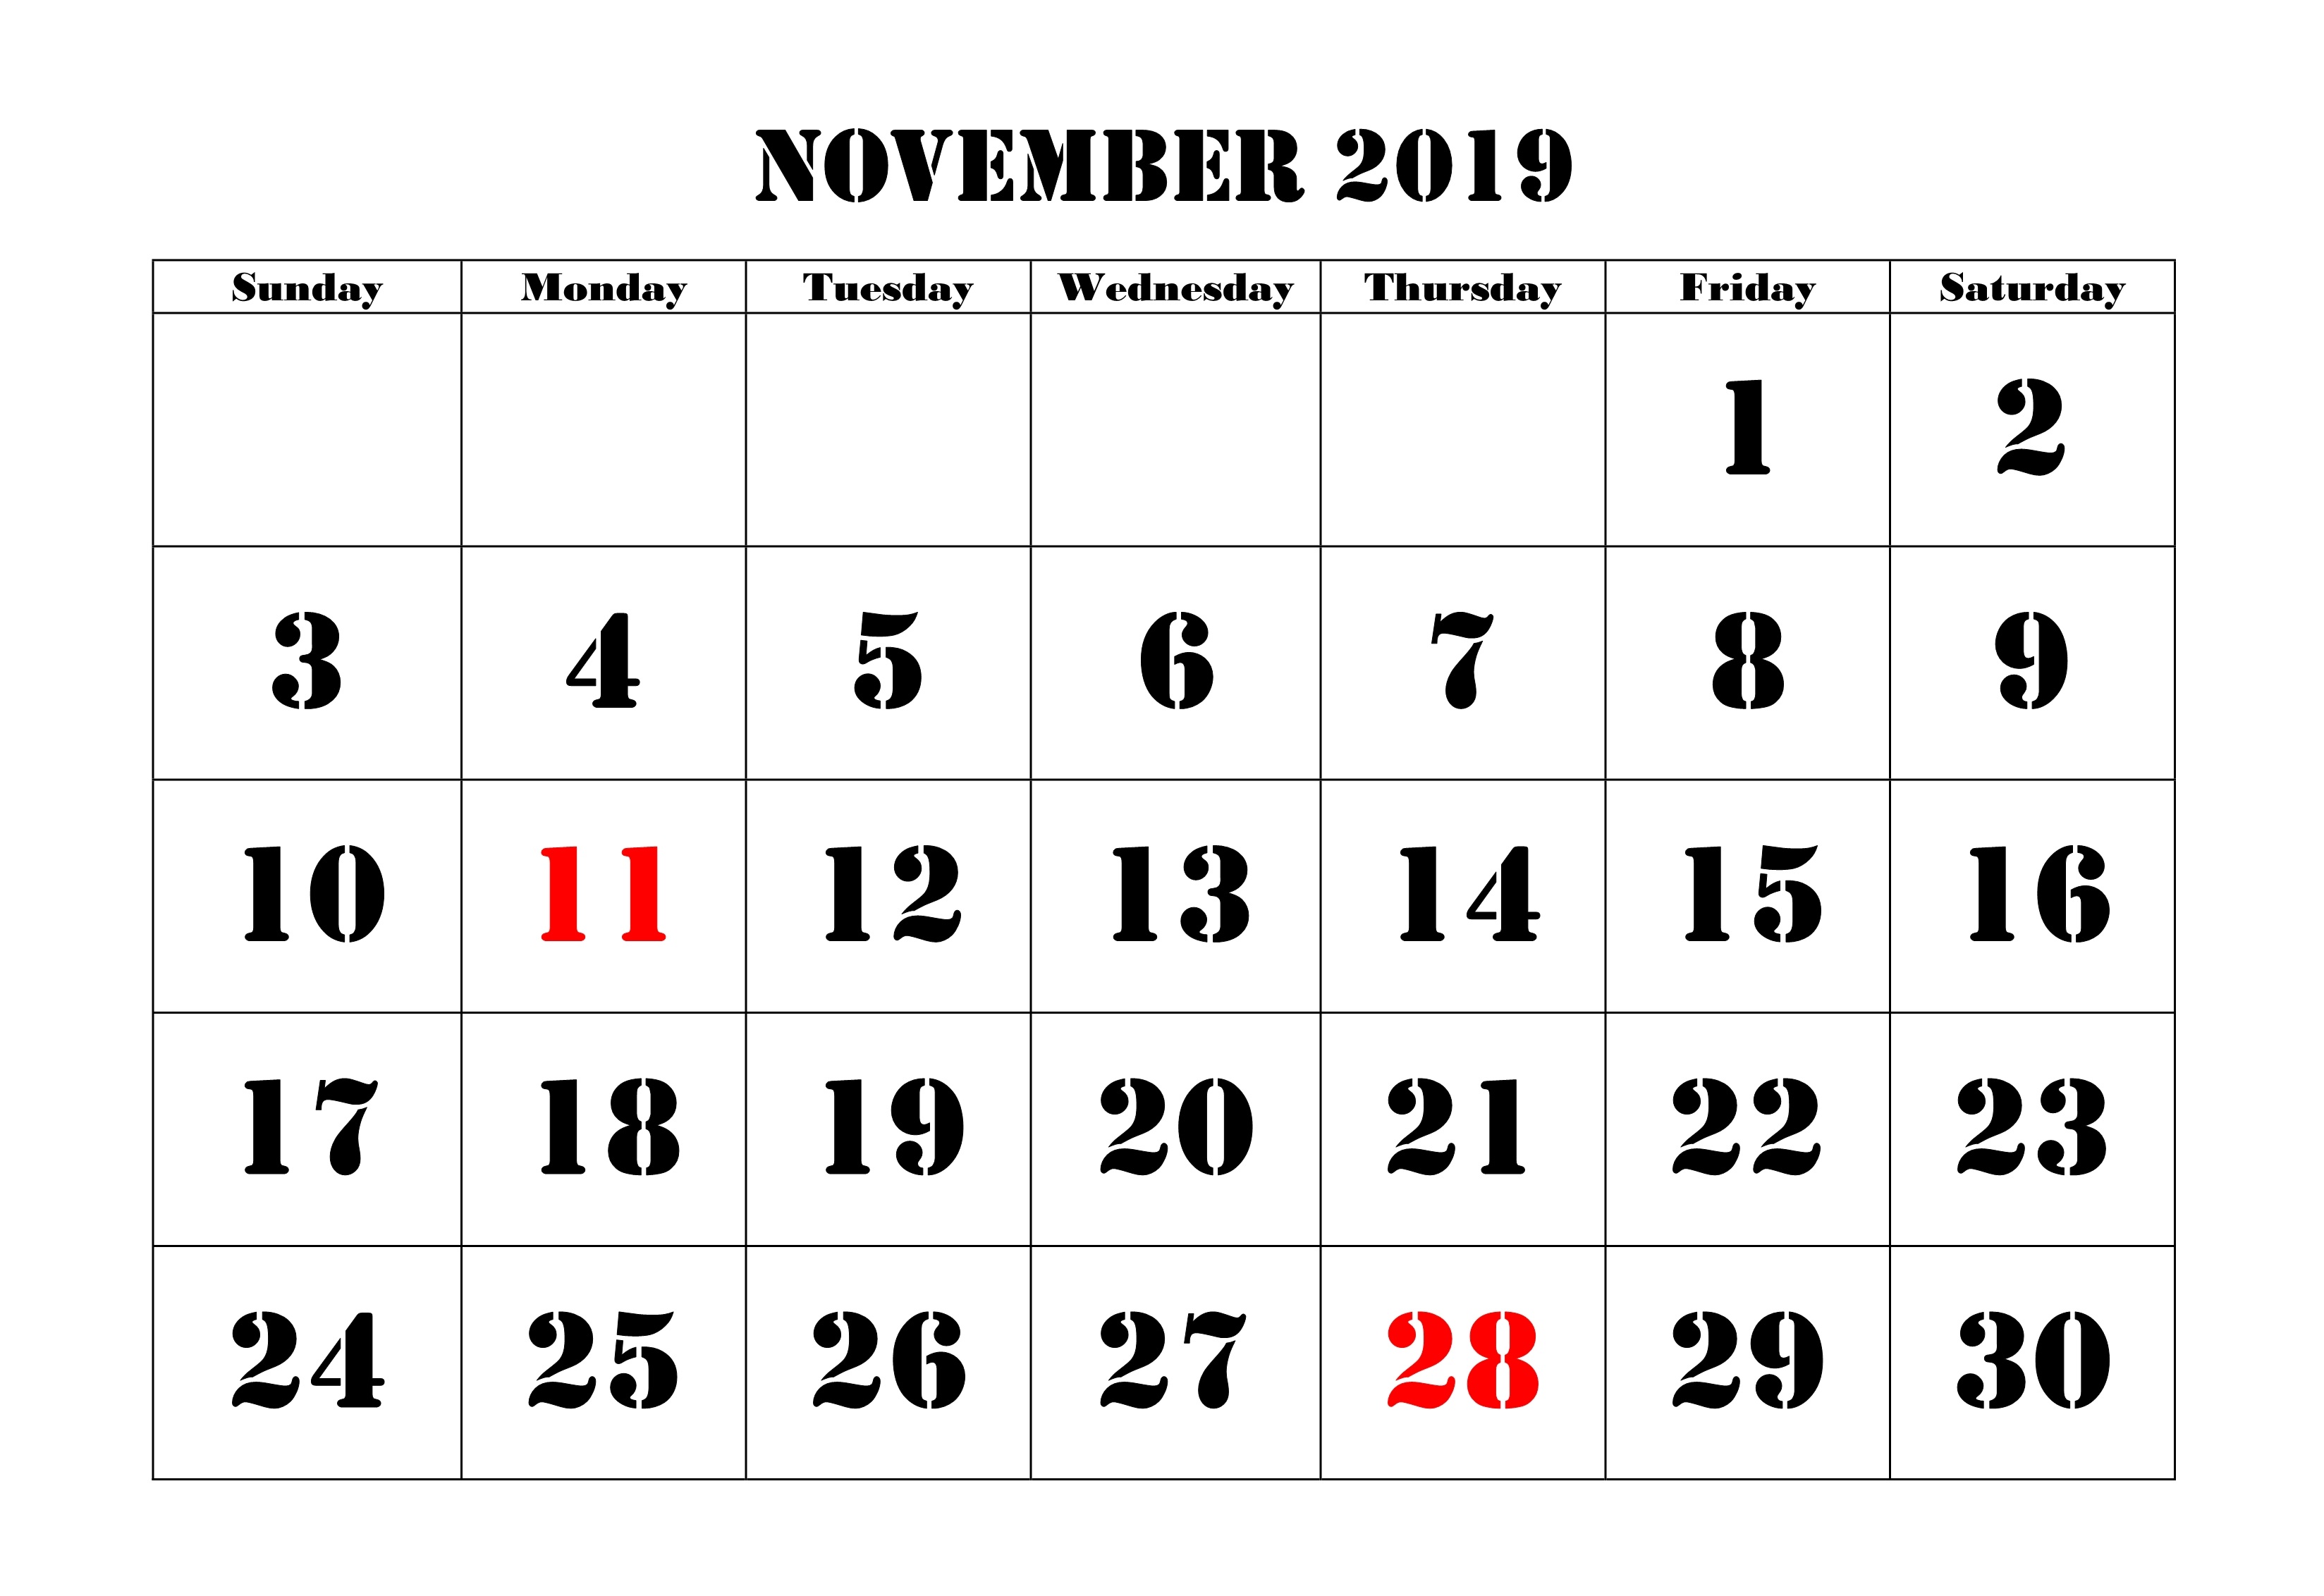 November 2019 Monthly Calendar